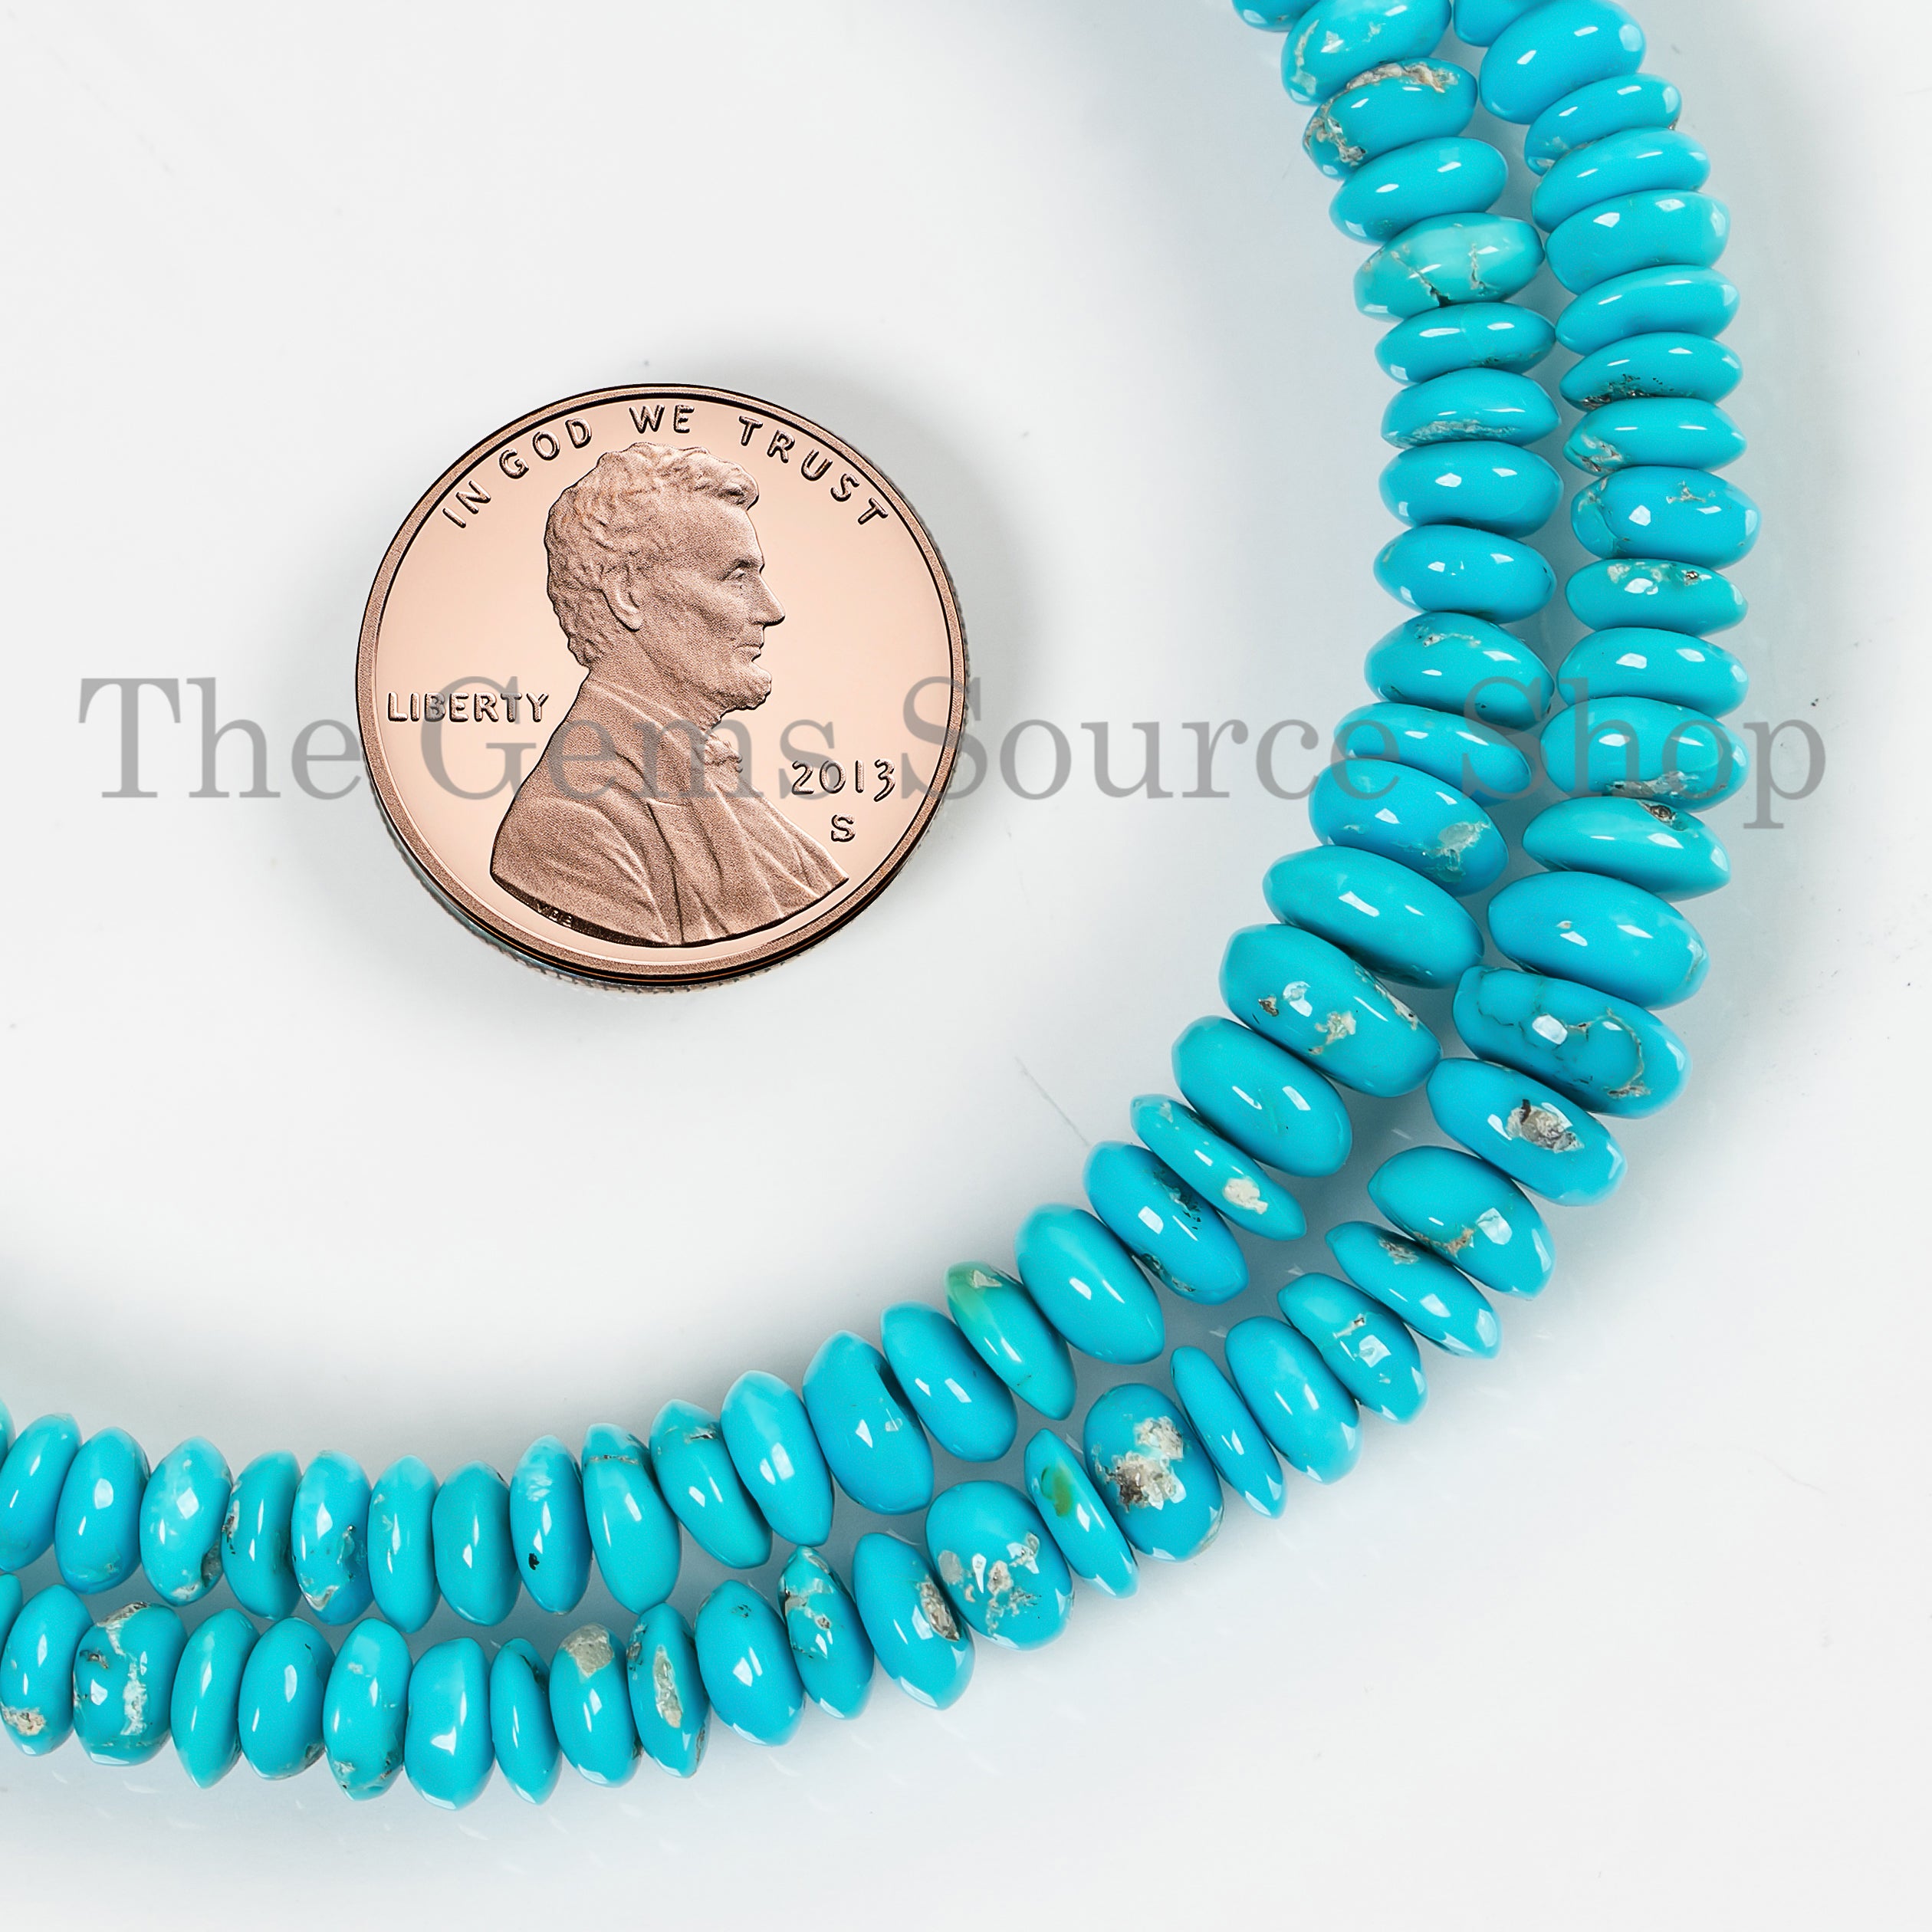 Sleeping Beauty Turquoise Beads, 3.5-6 mm Turquoise Button Shape, Turquoise Smooth Beads, Turquoise Gemstone Beads